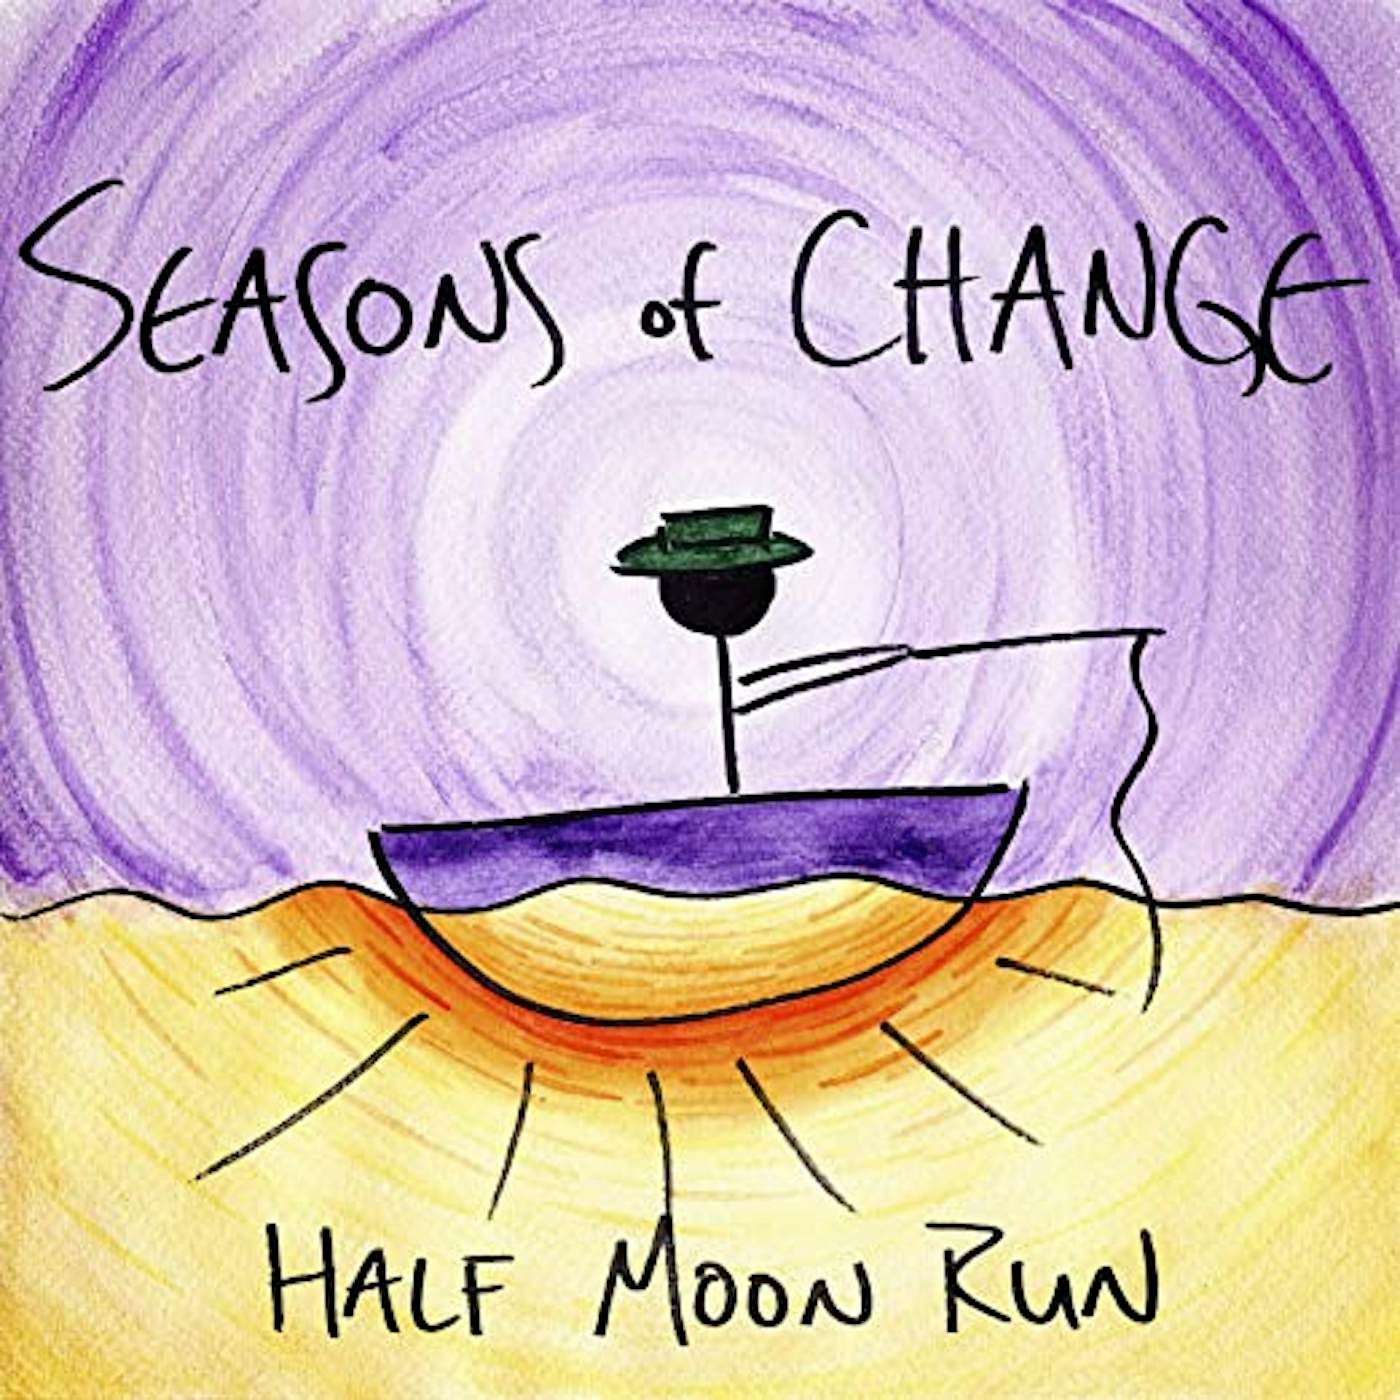 Half Moon Run Seasons of Change Vinyl Record